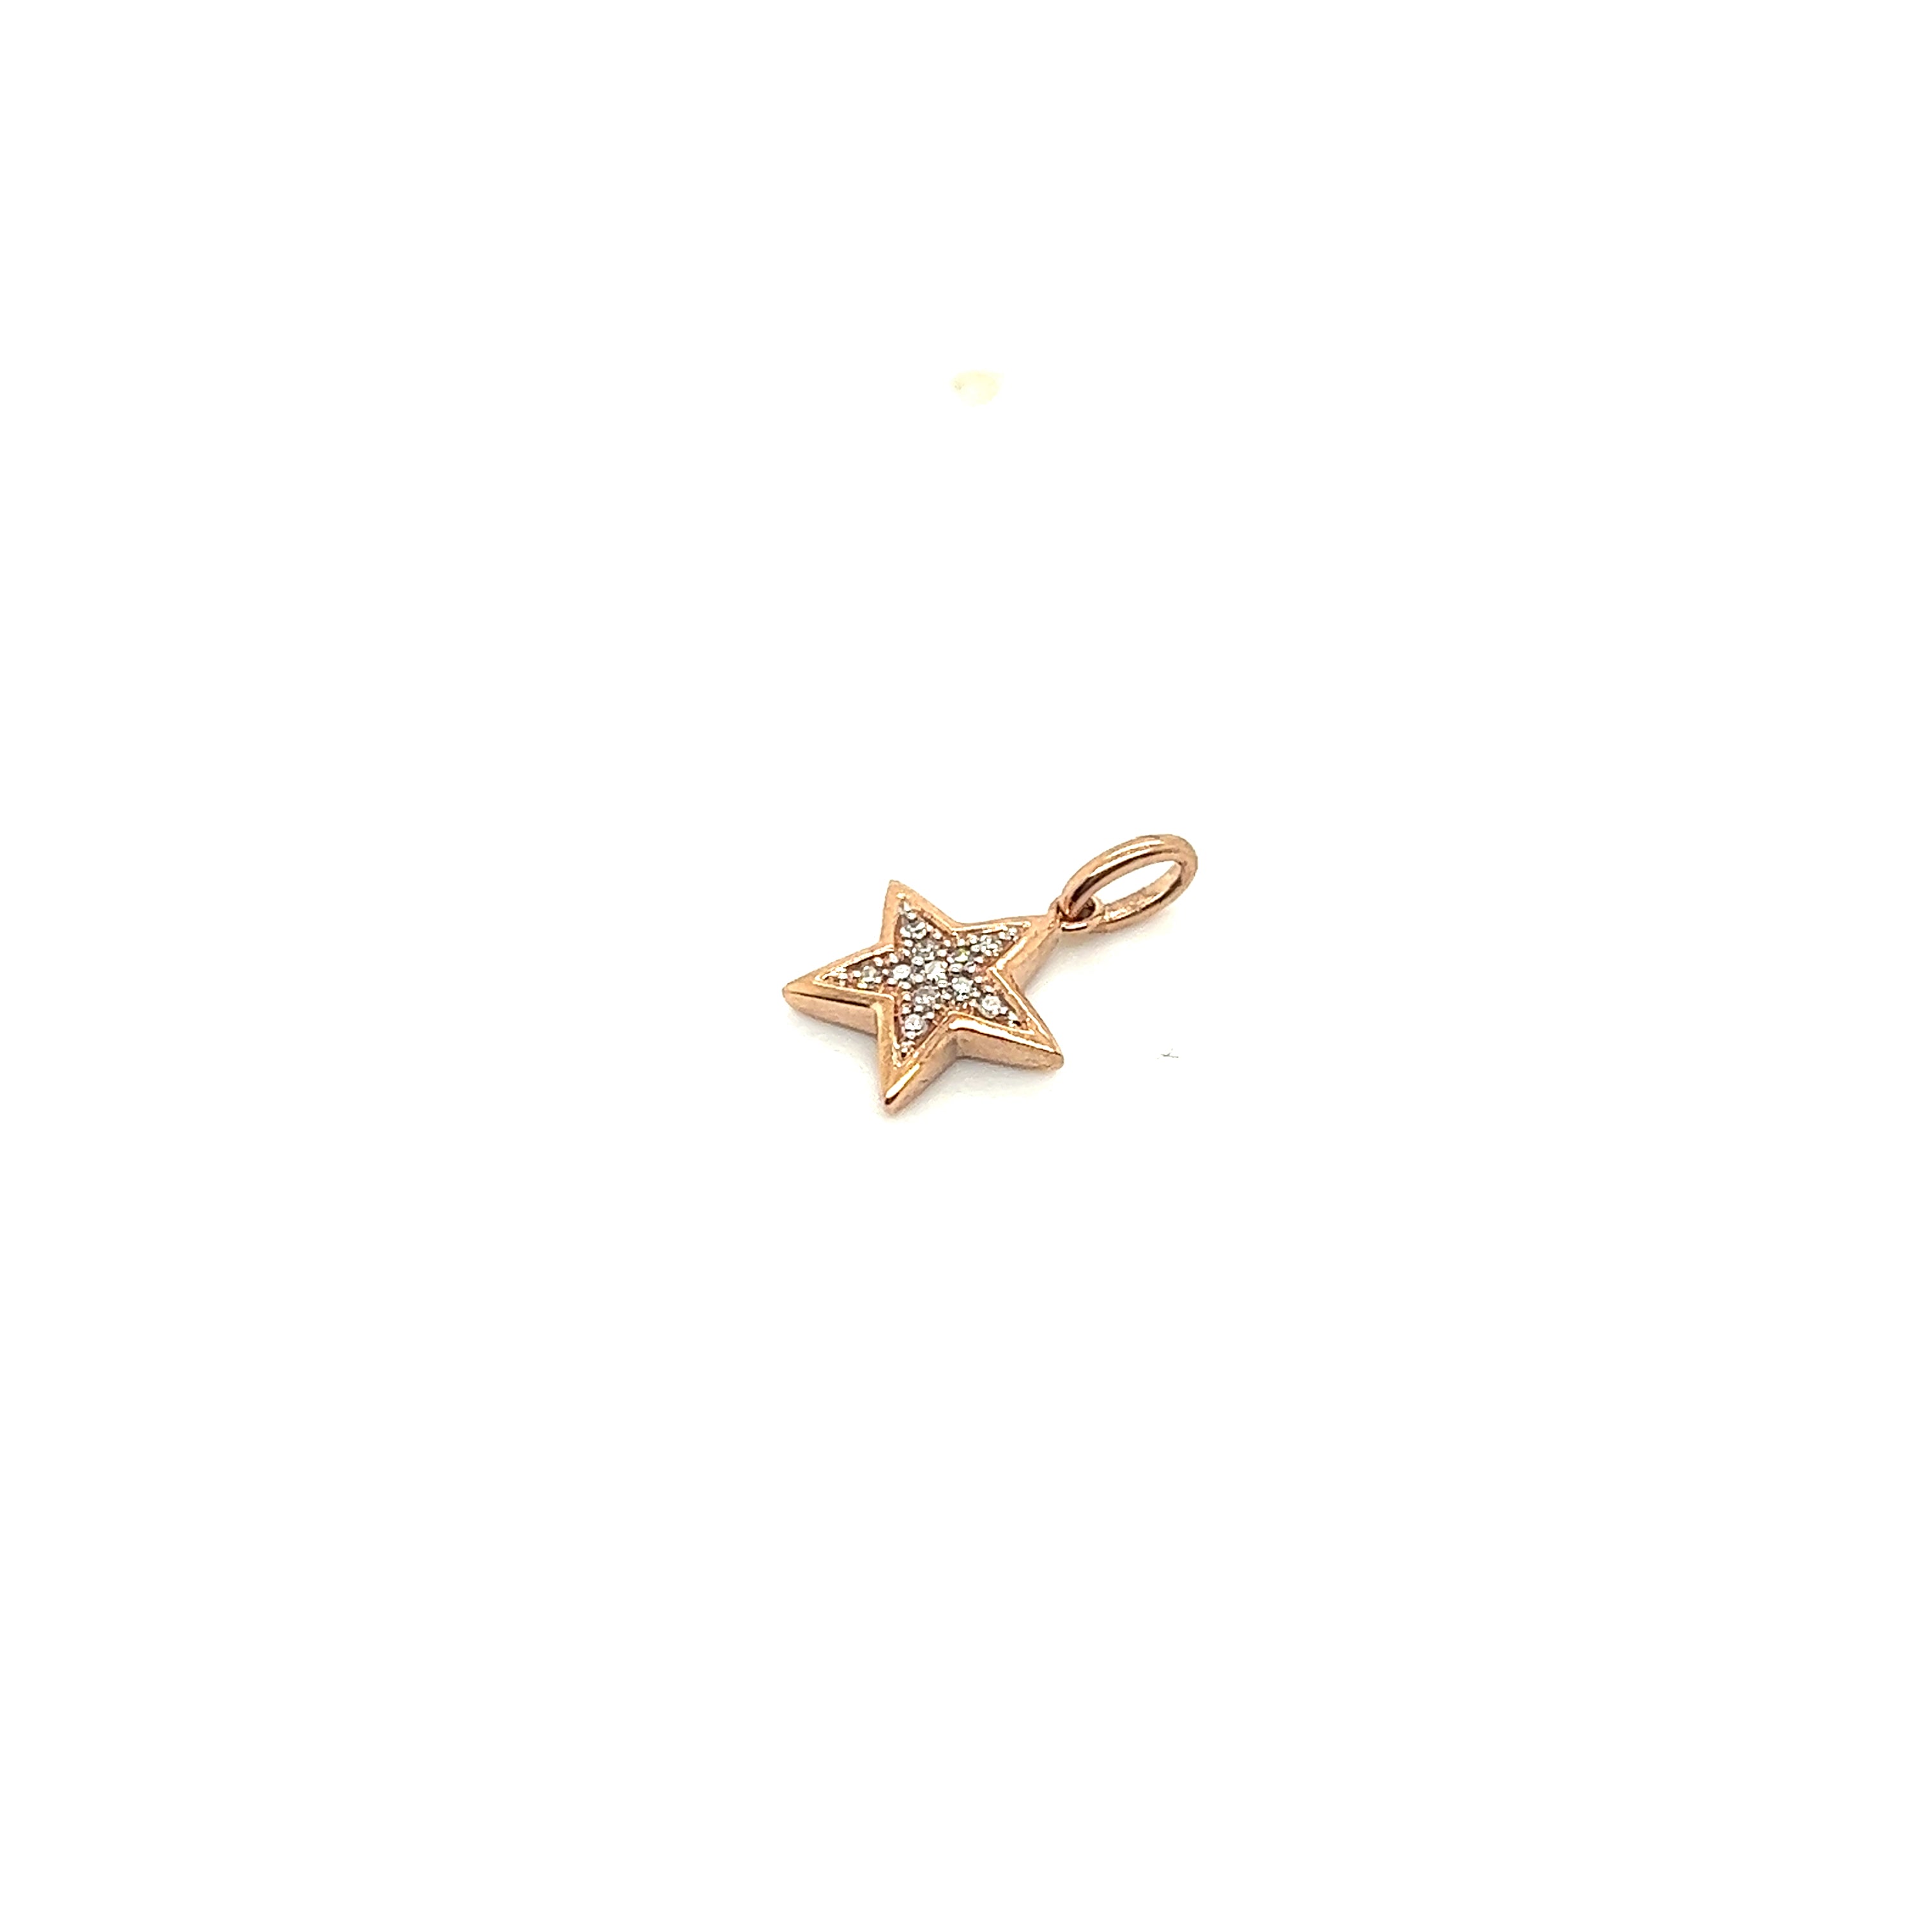 10ct rose gold diamond star pendant.